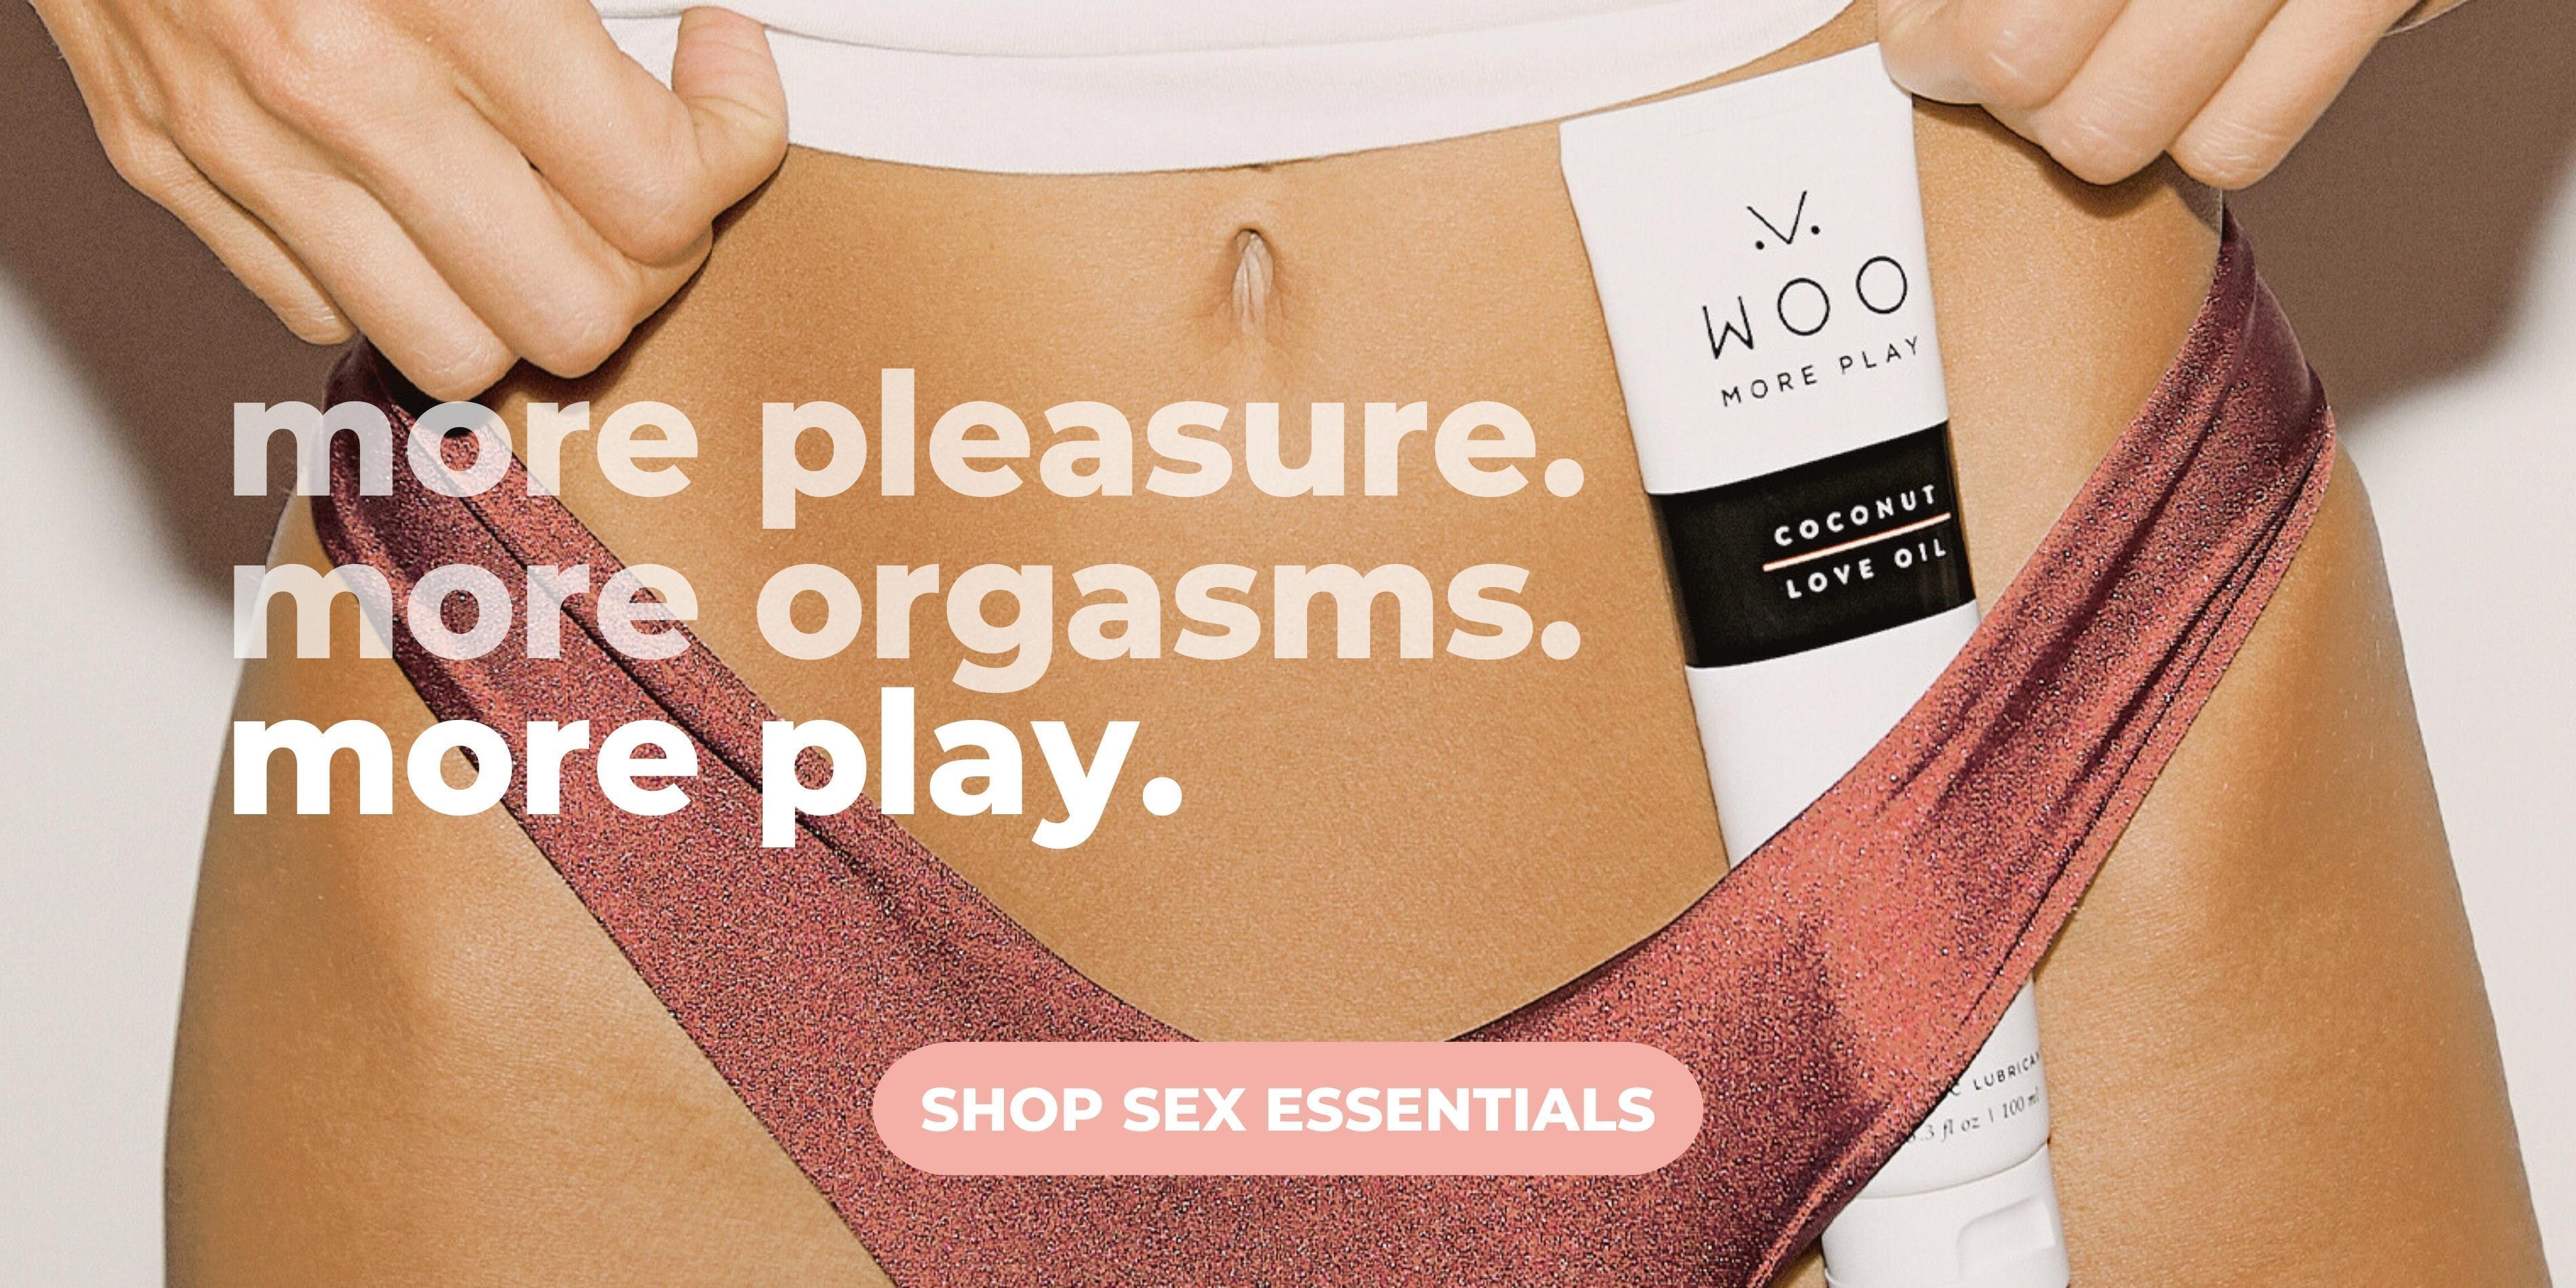 More pleasure. More orgasms. More play. Shop Sex Essentials.